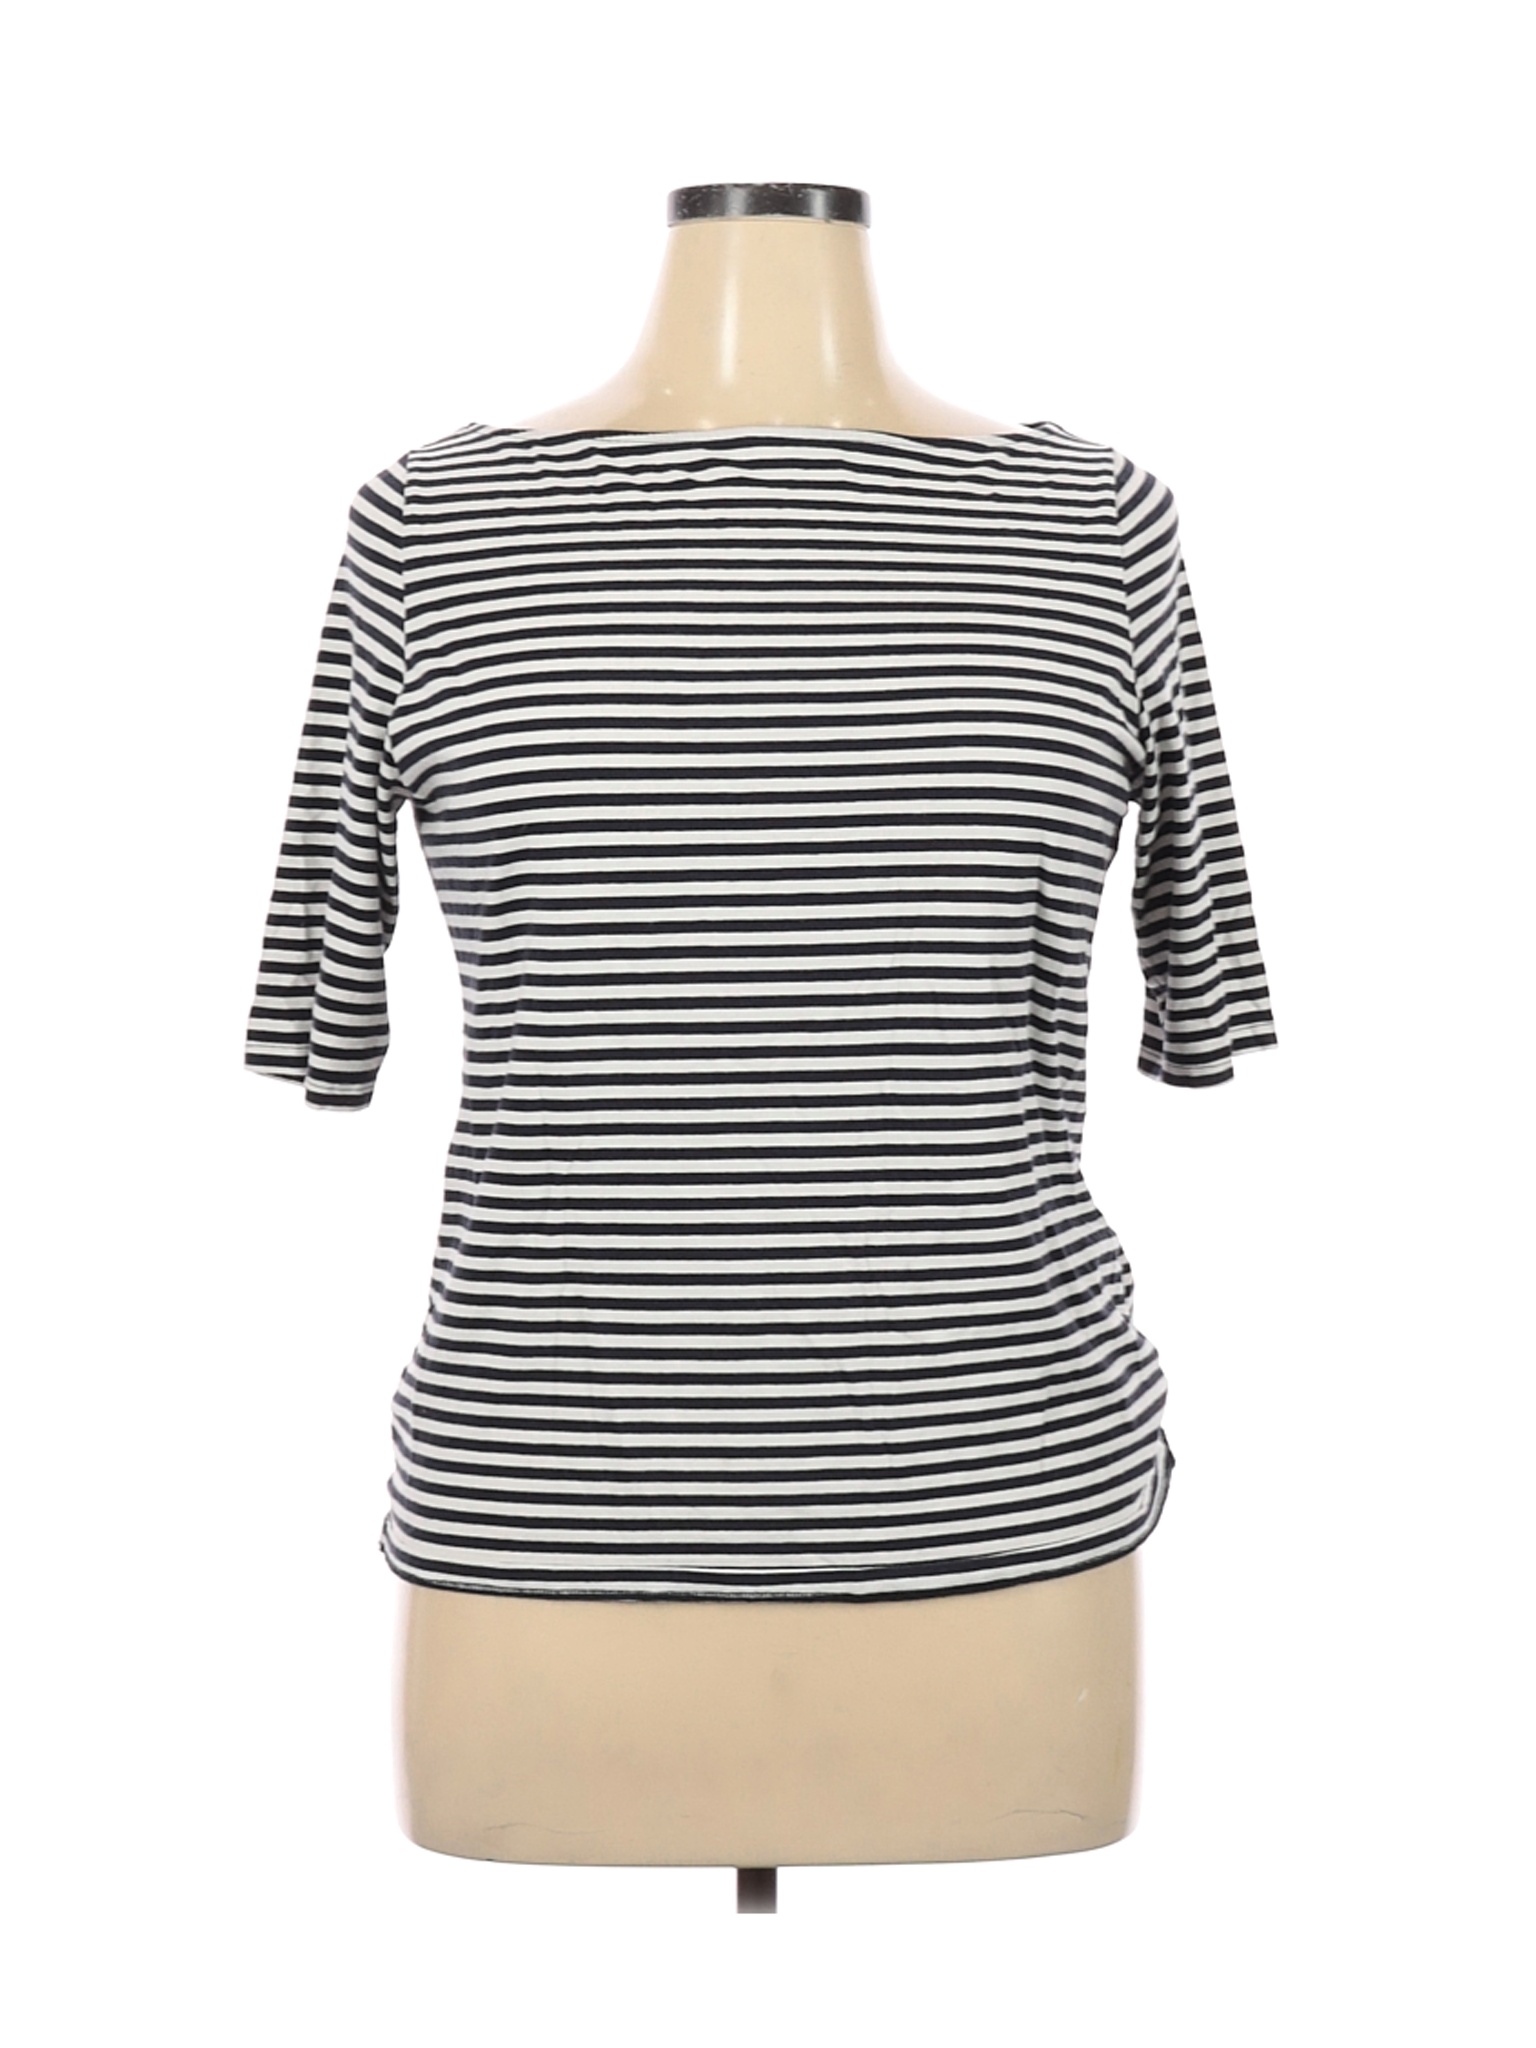 H&M Women Black Short Sleeve T-Shirt XL | eBay